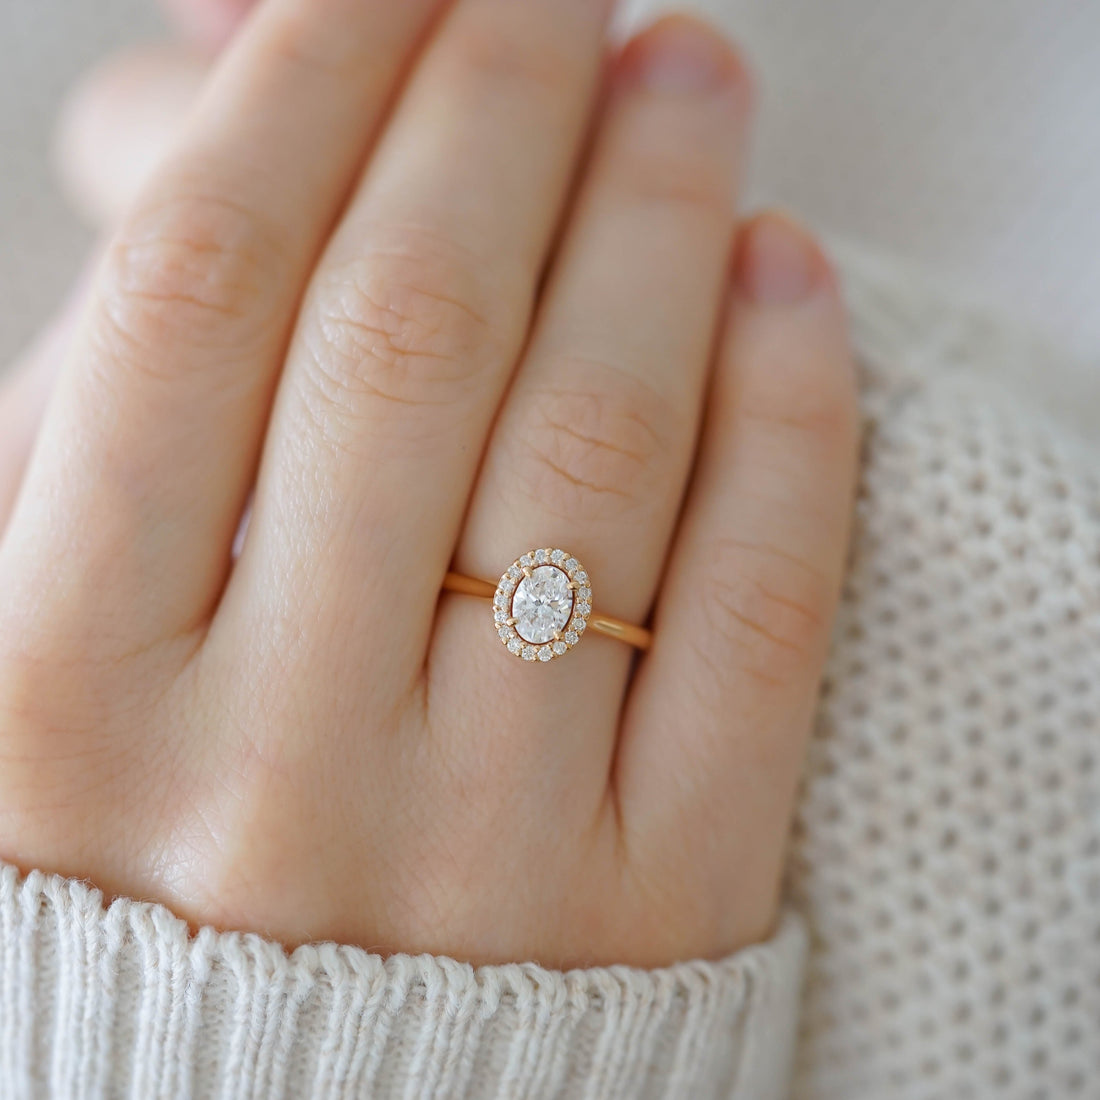 burcu-okut-jewellery-jewelry-designer-vintage-oval-diamond-engagement-ring-18K-solid-gold-proposal-natural-gem-stone-ring-woman-man-elegant-